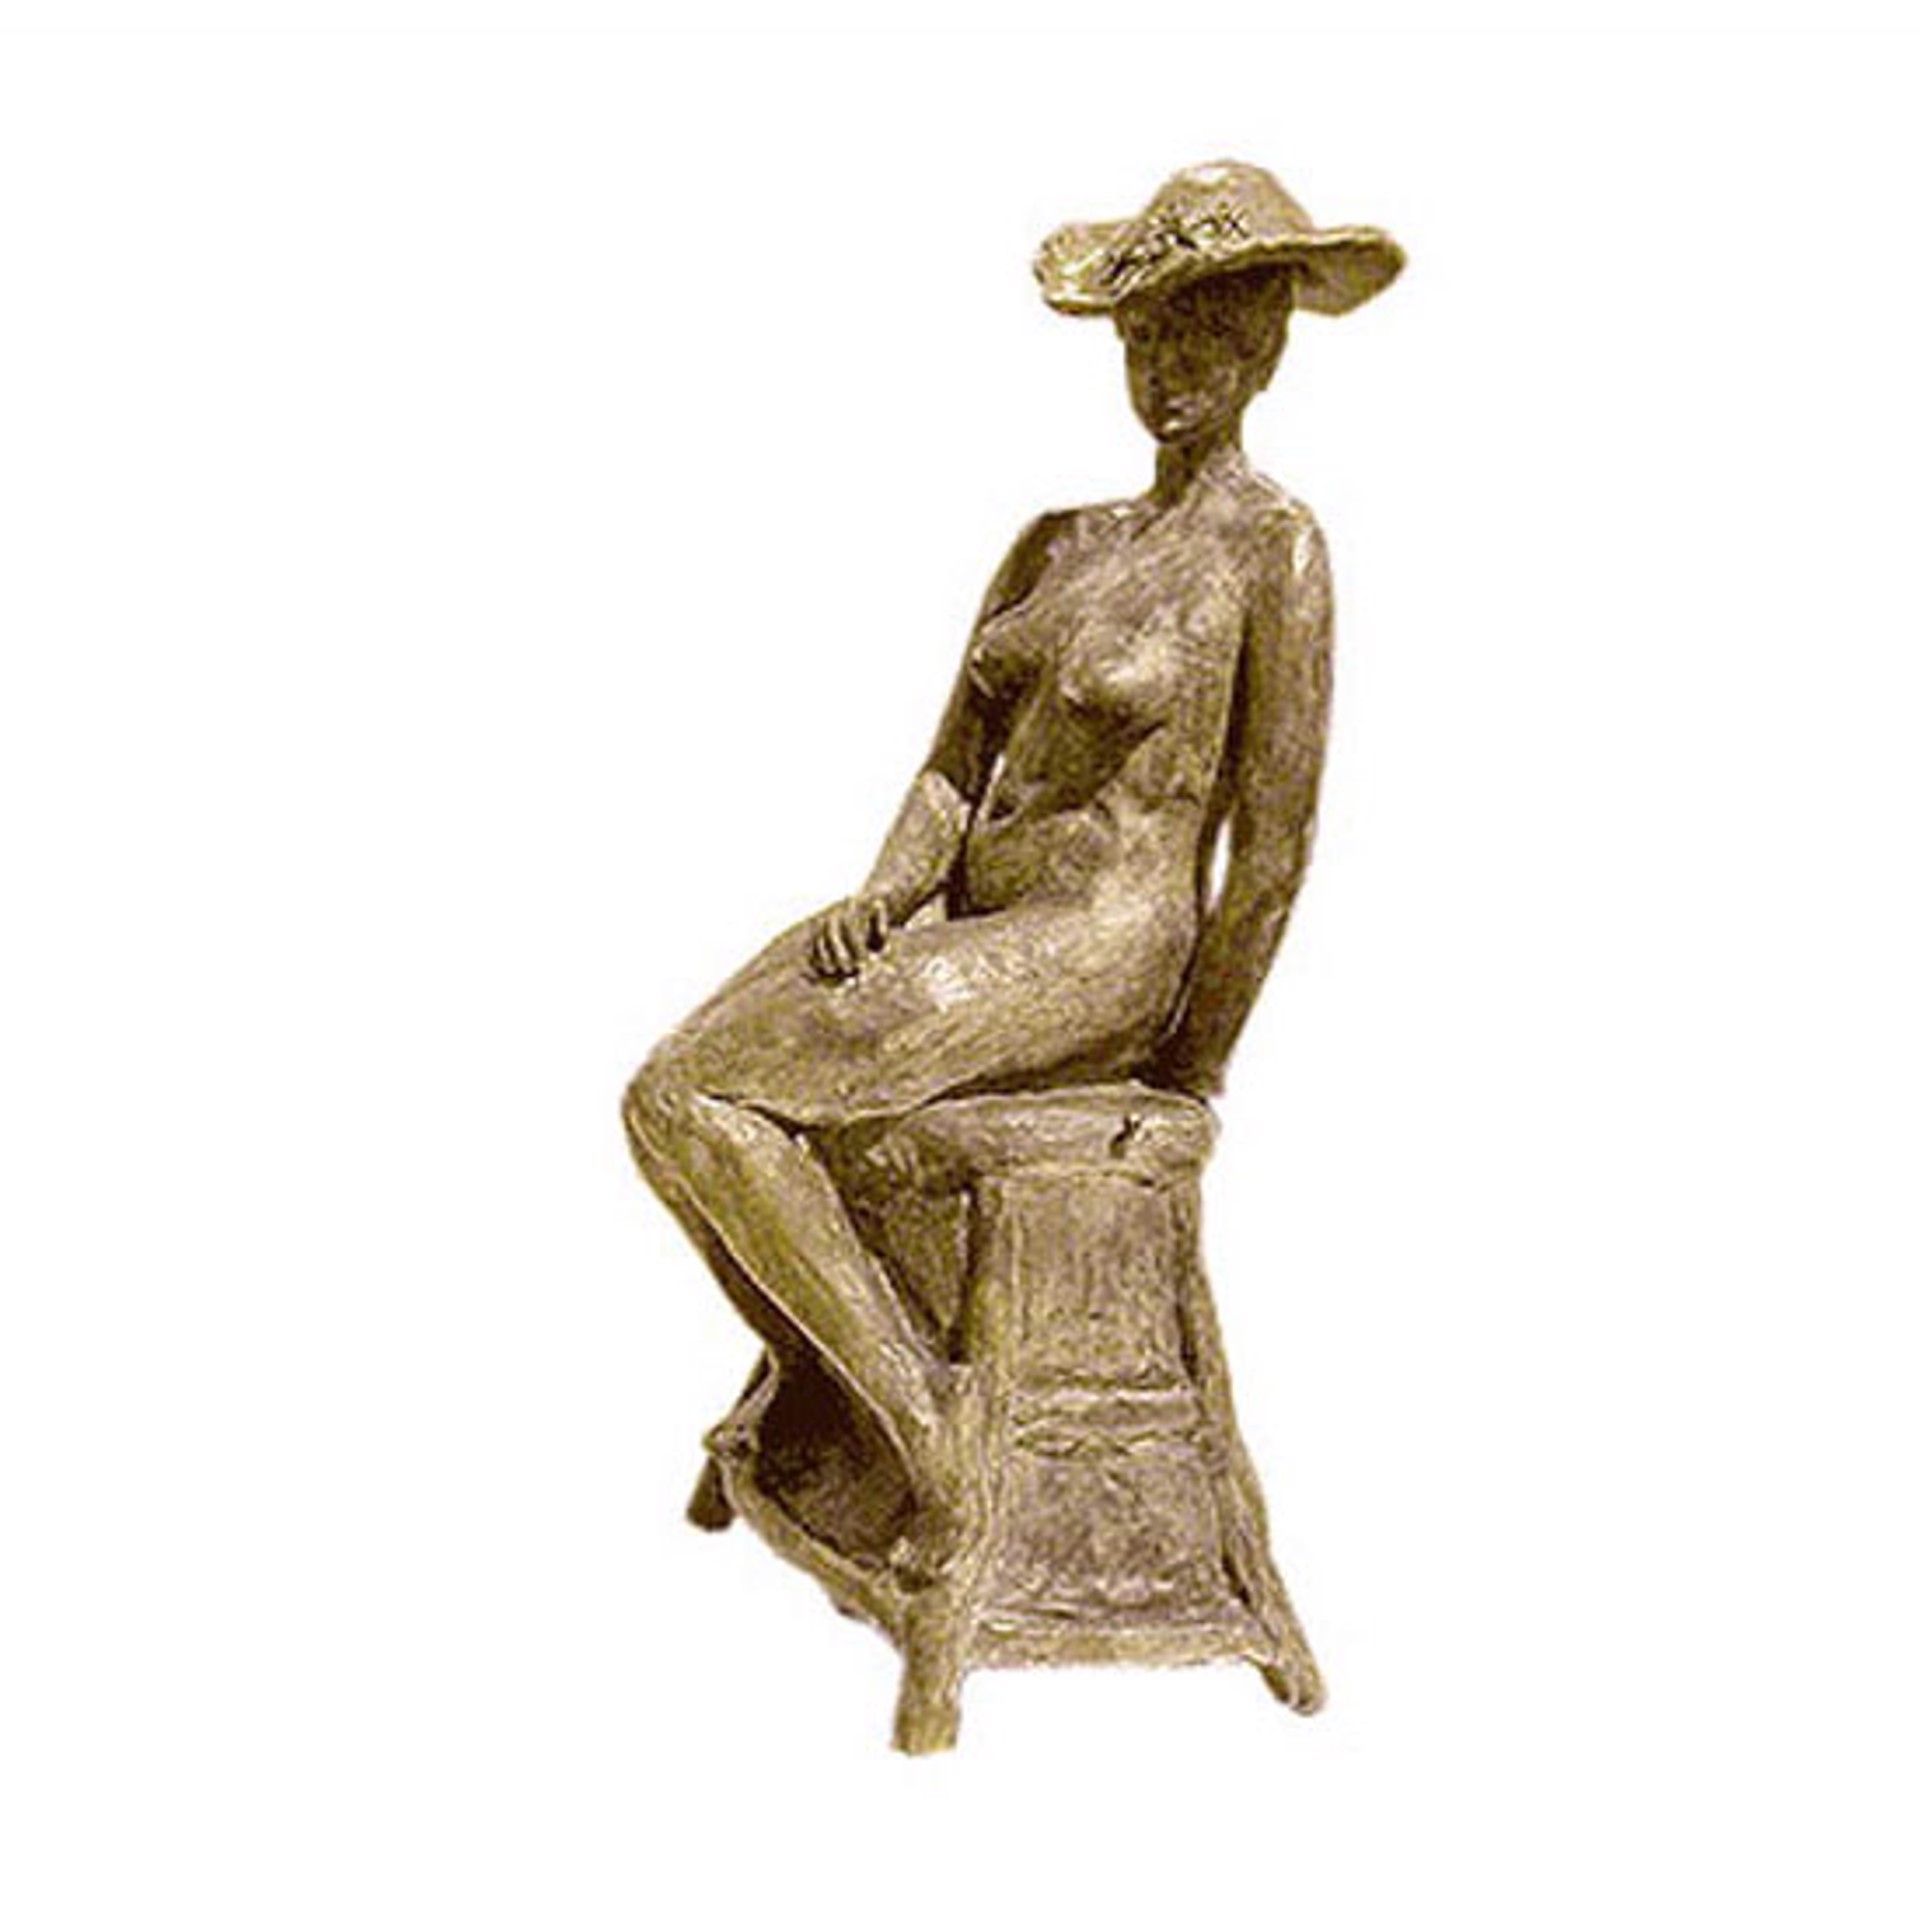 Jeune Fille avec Chapeau Fleuri après Rodin by Paula Stern